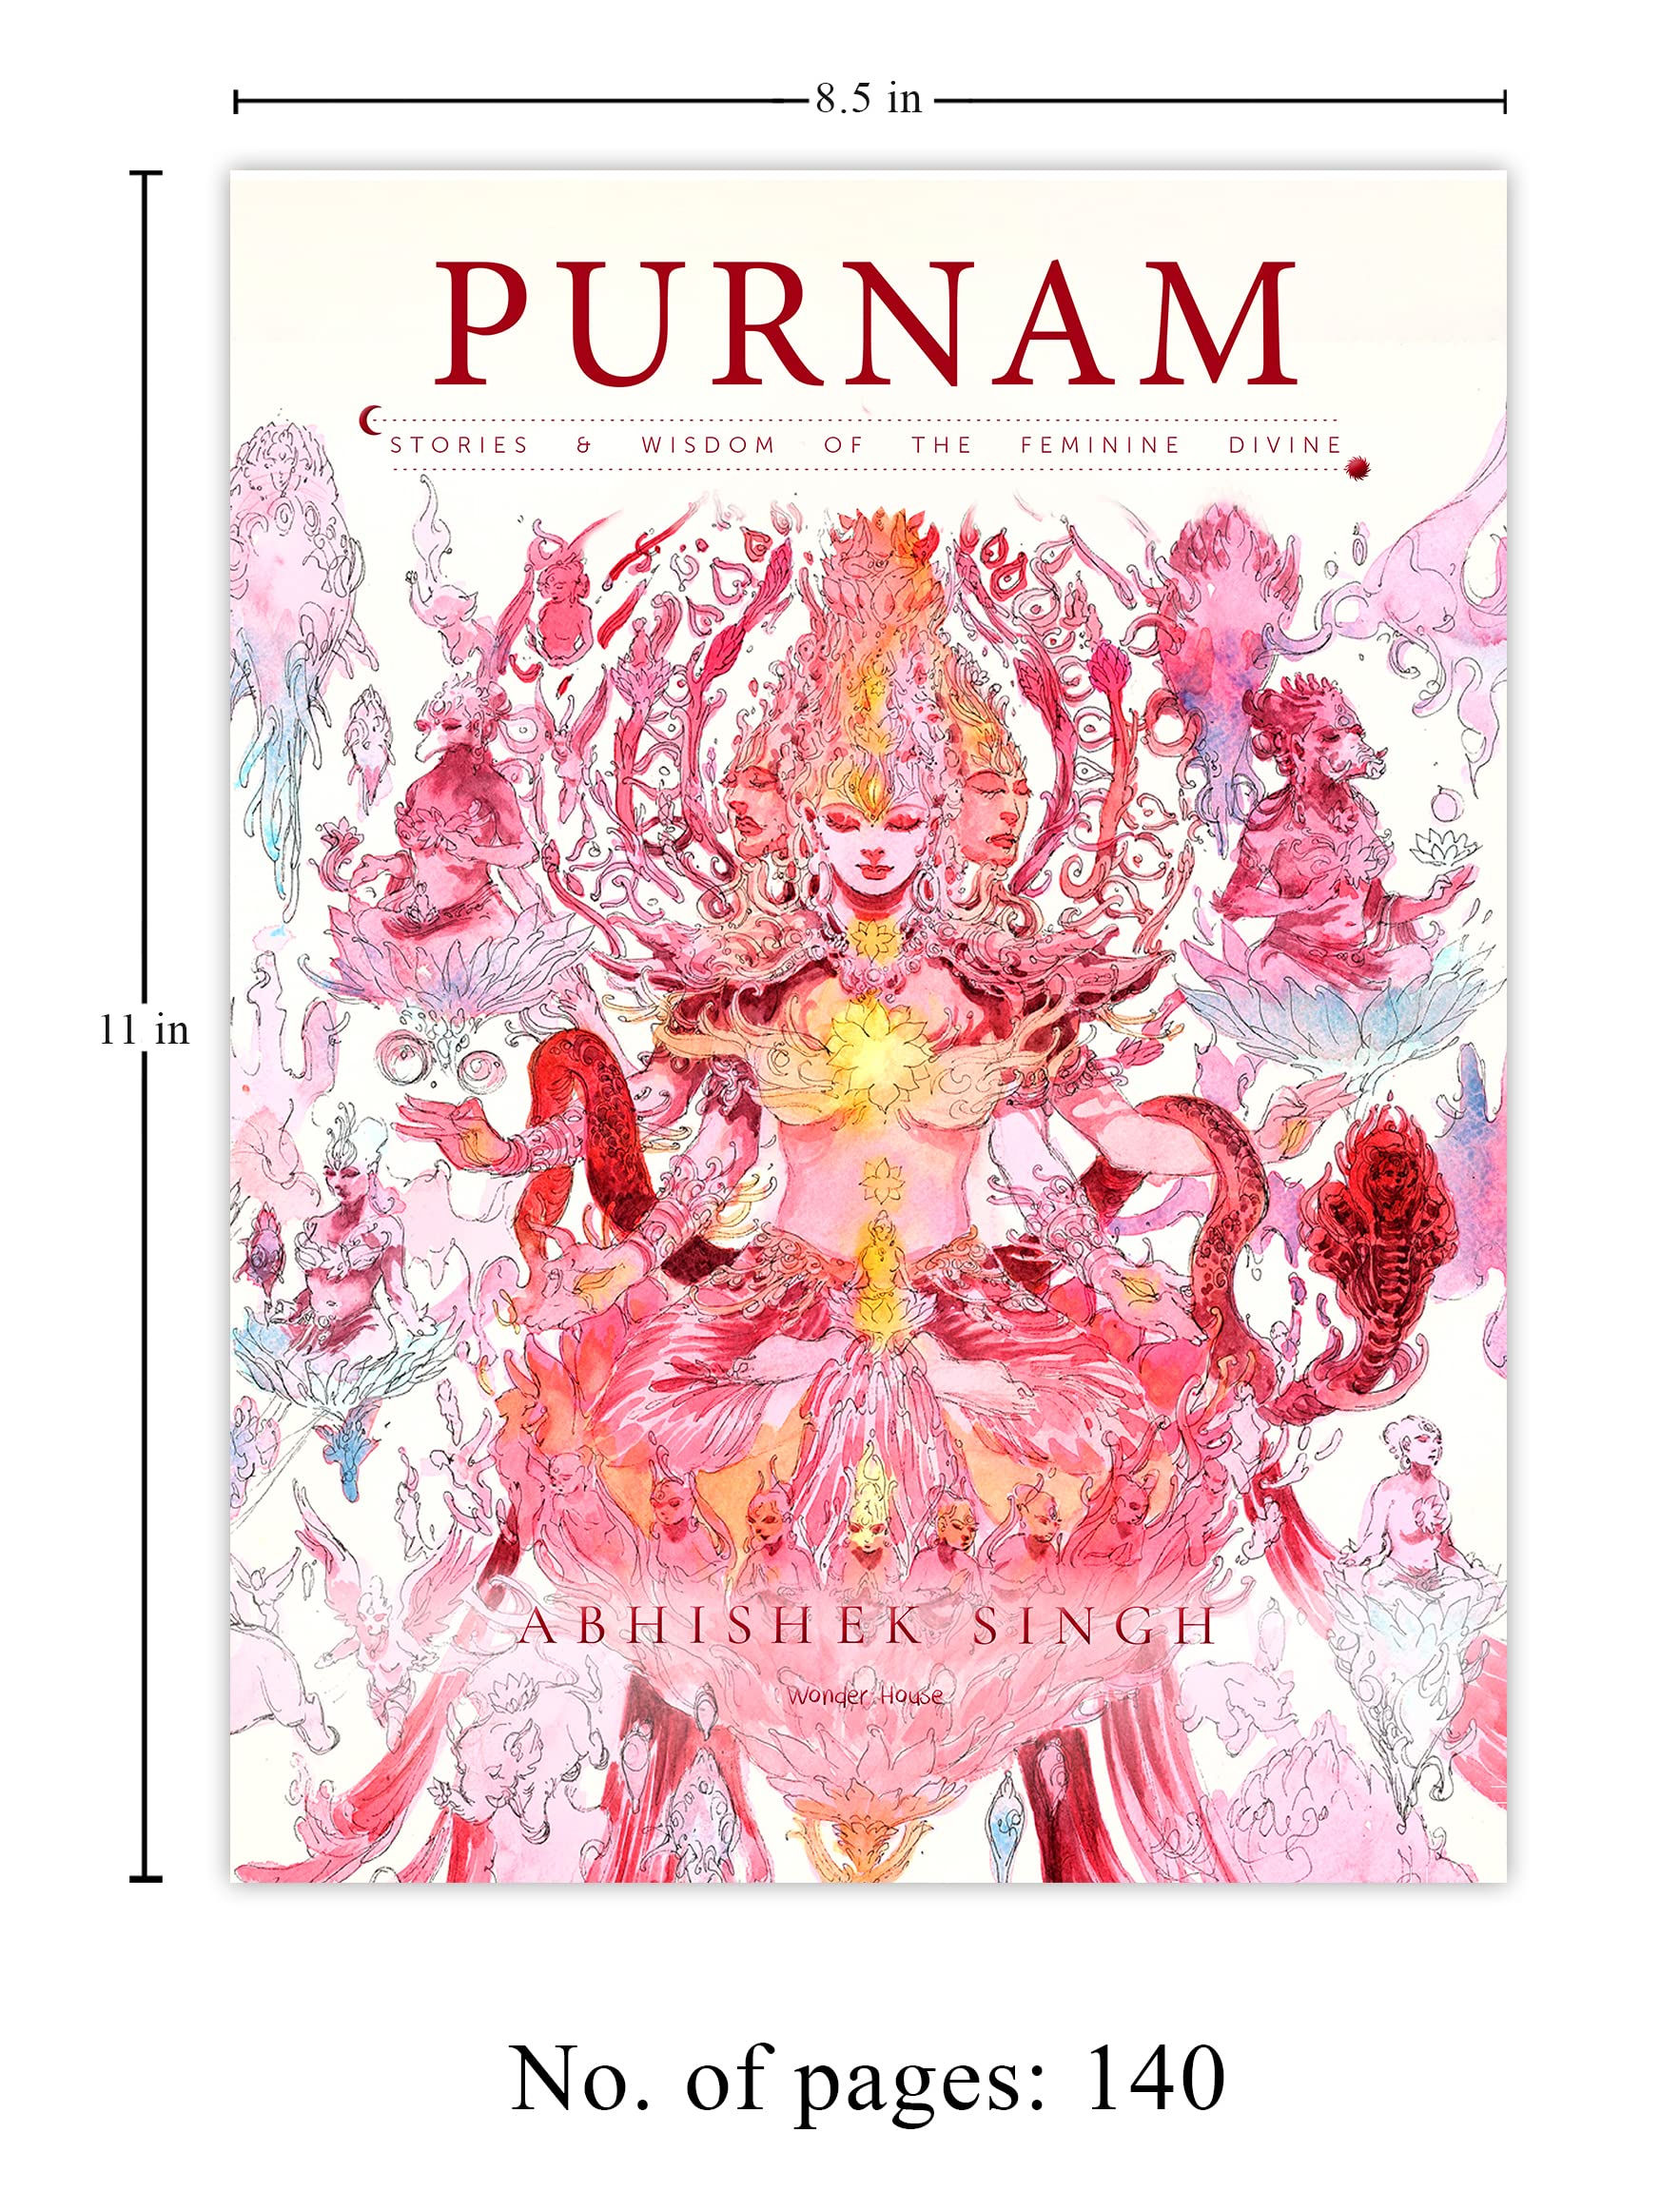 Purnam: Stories & Wisdom of the Feminine Divine